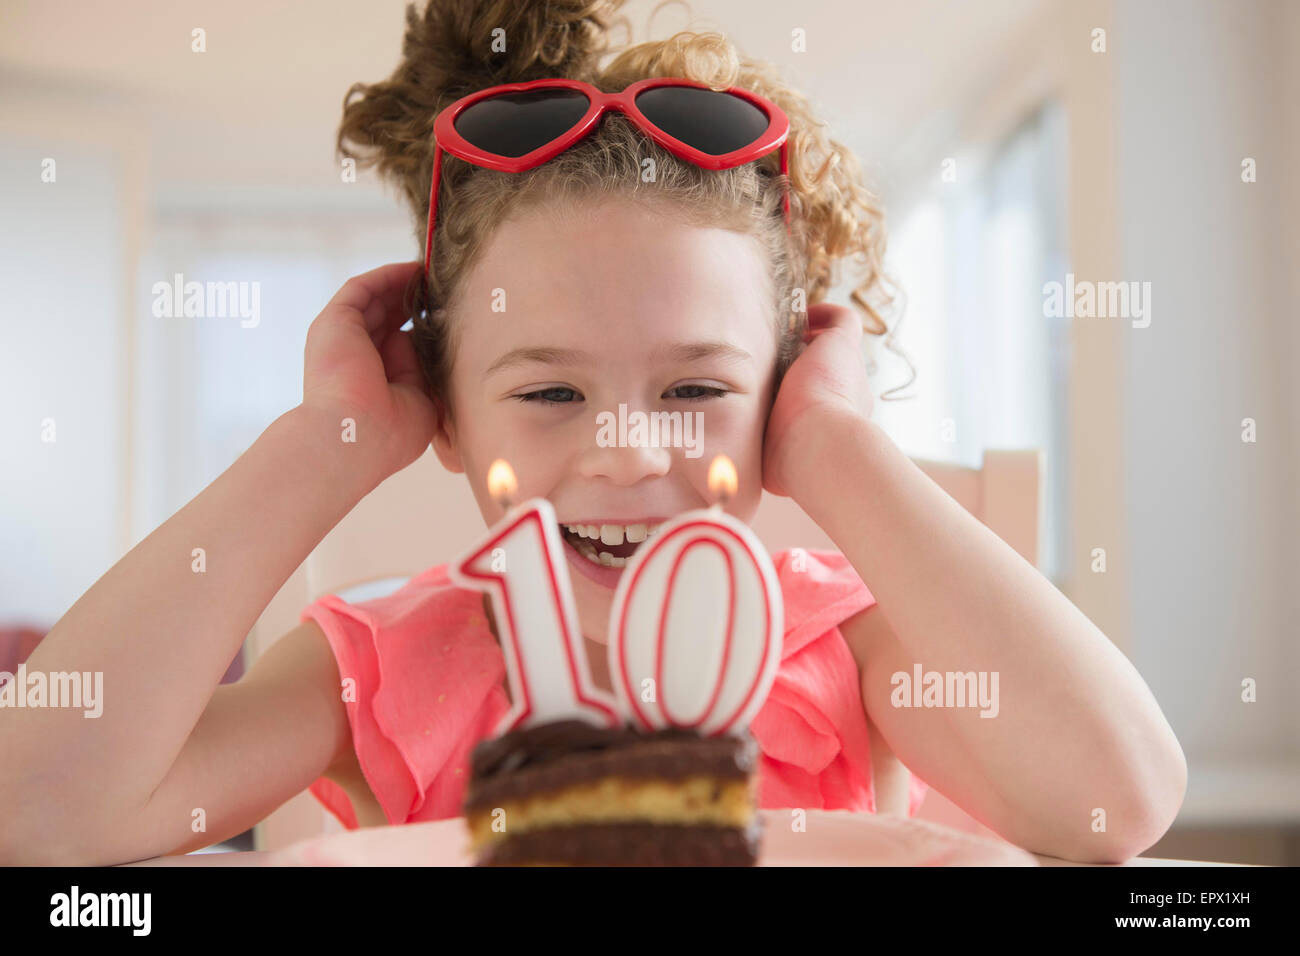 Mädchen (10-11) feiert 10. Geburtstag Stockfoto